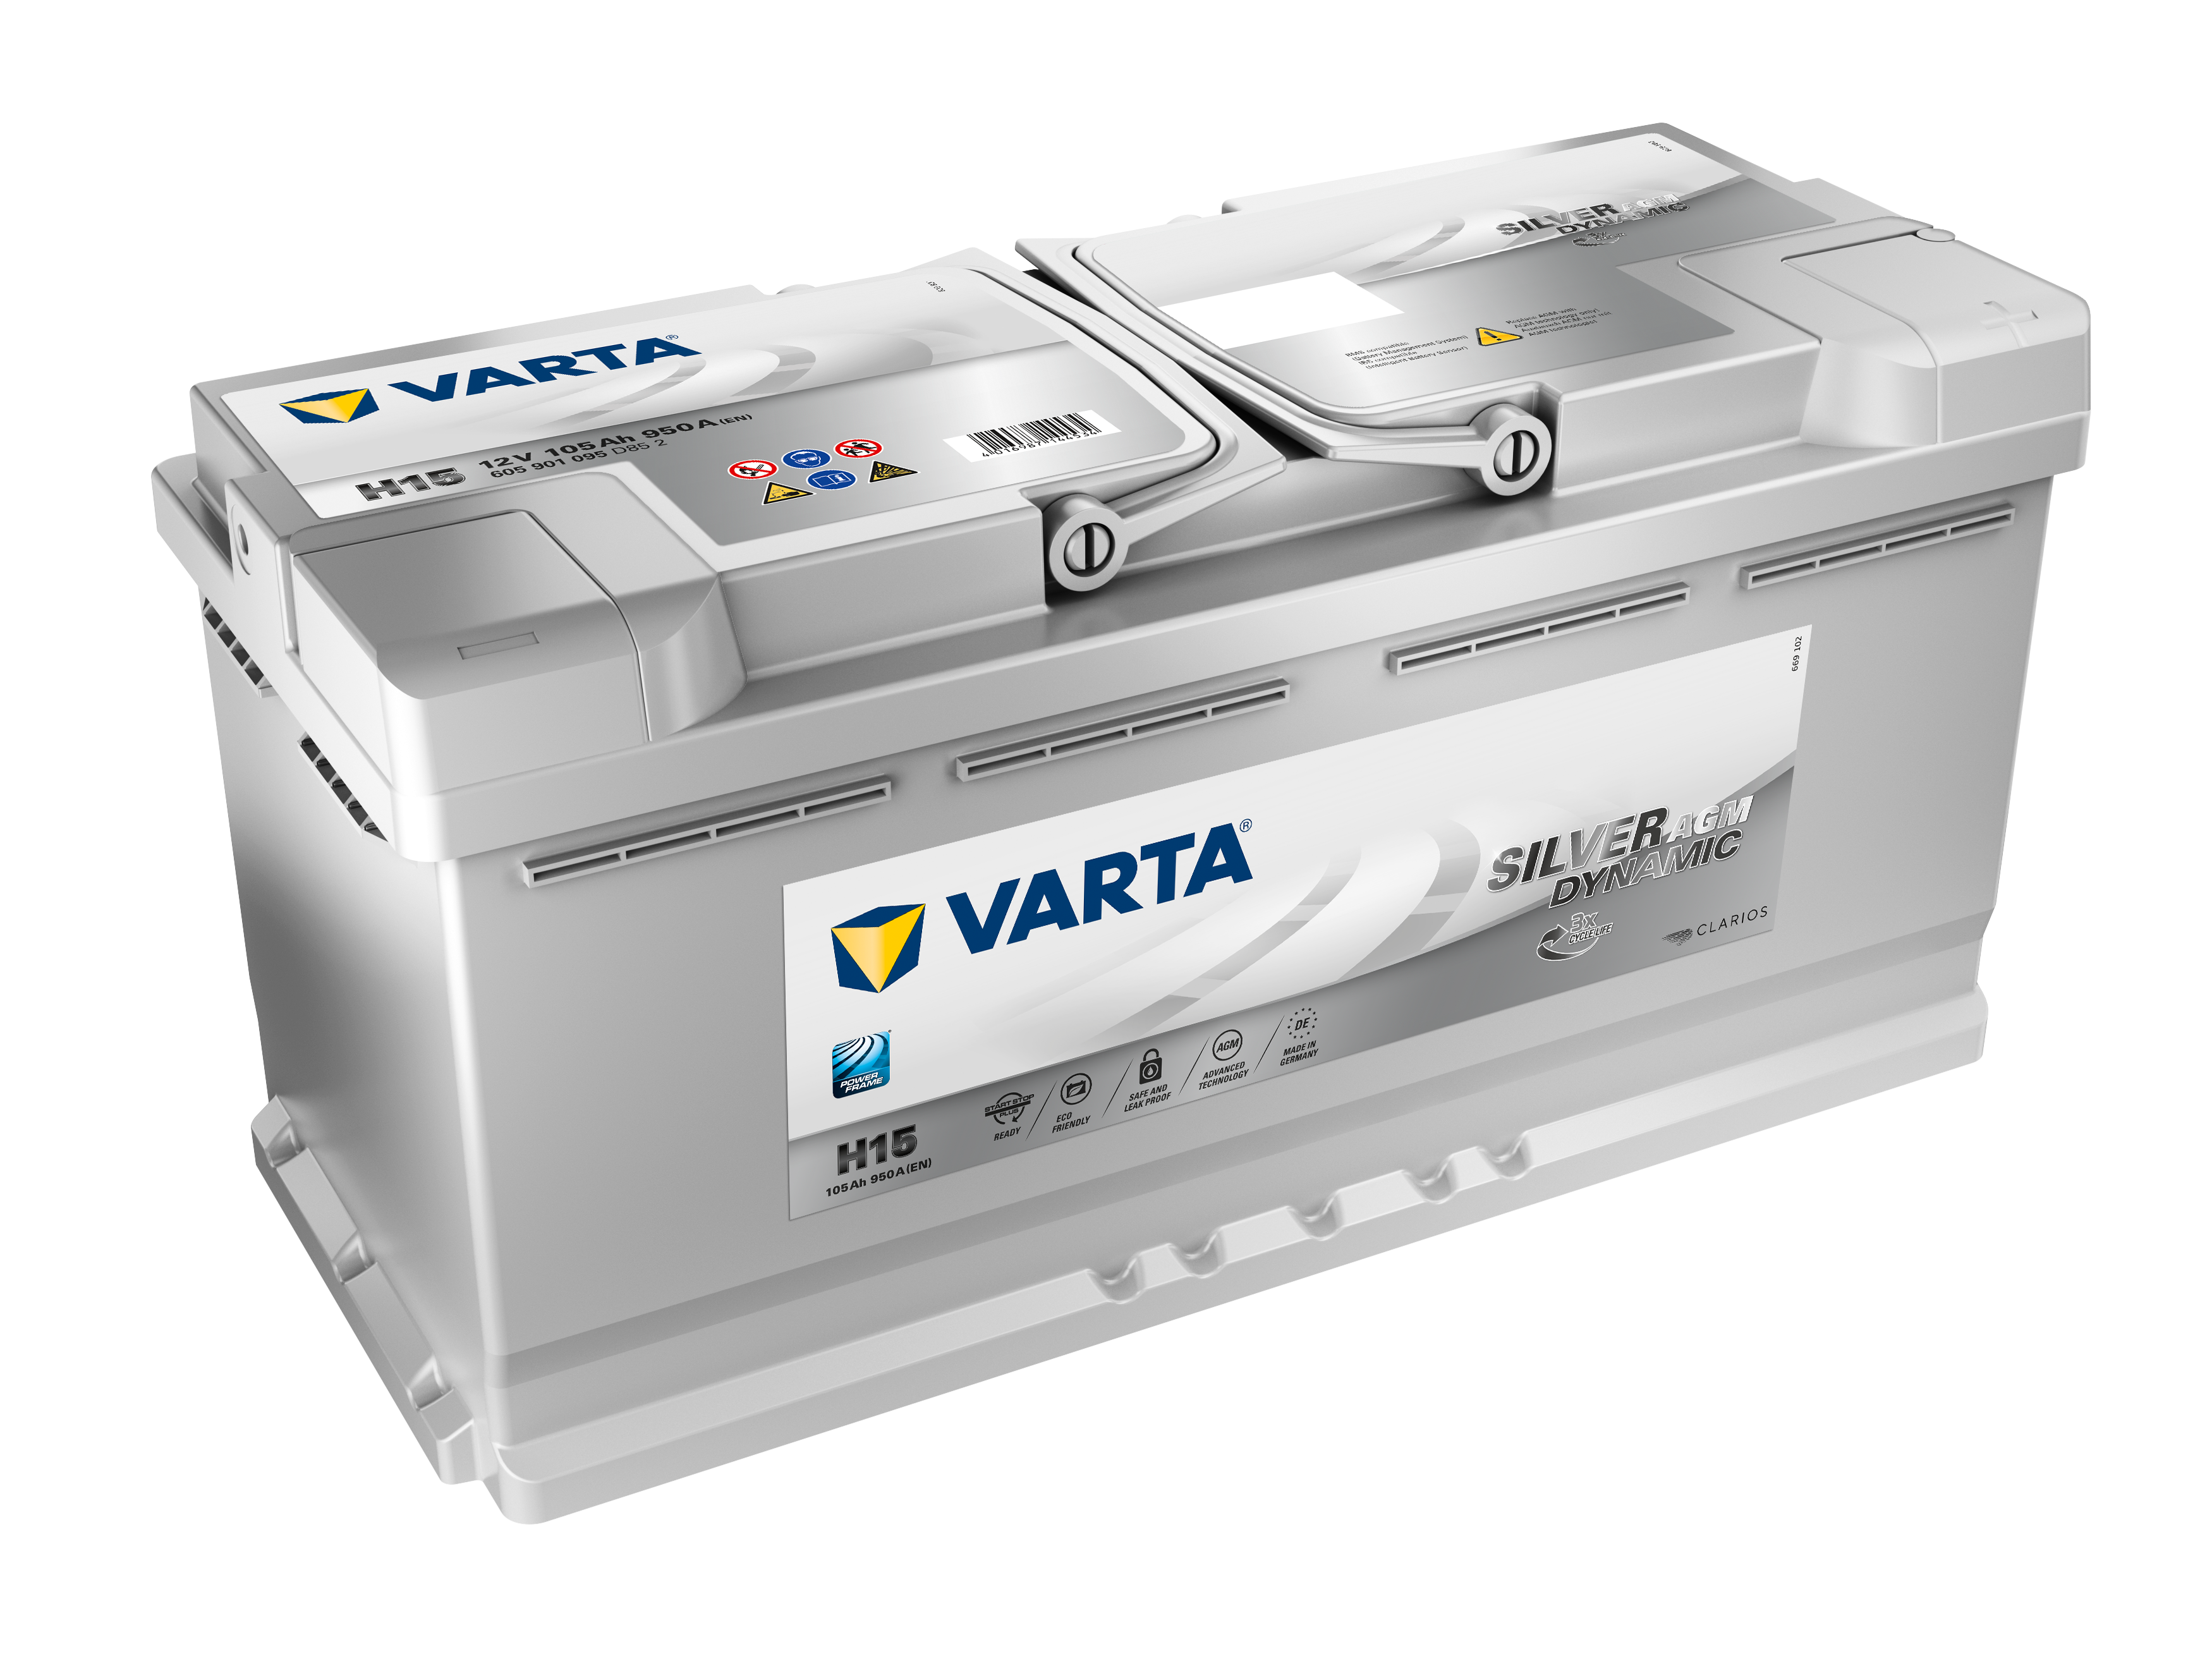 VARTA H15 60501 AGM Start-Stop